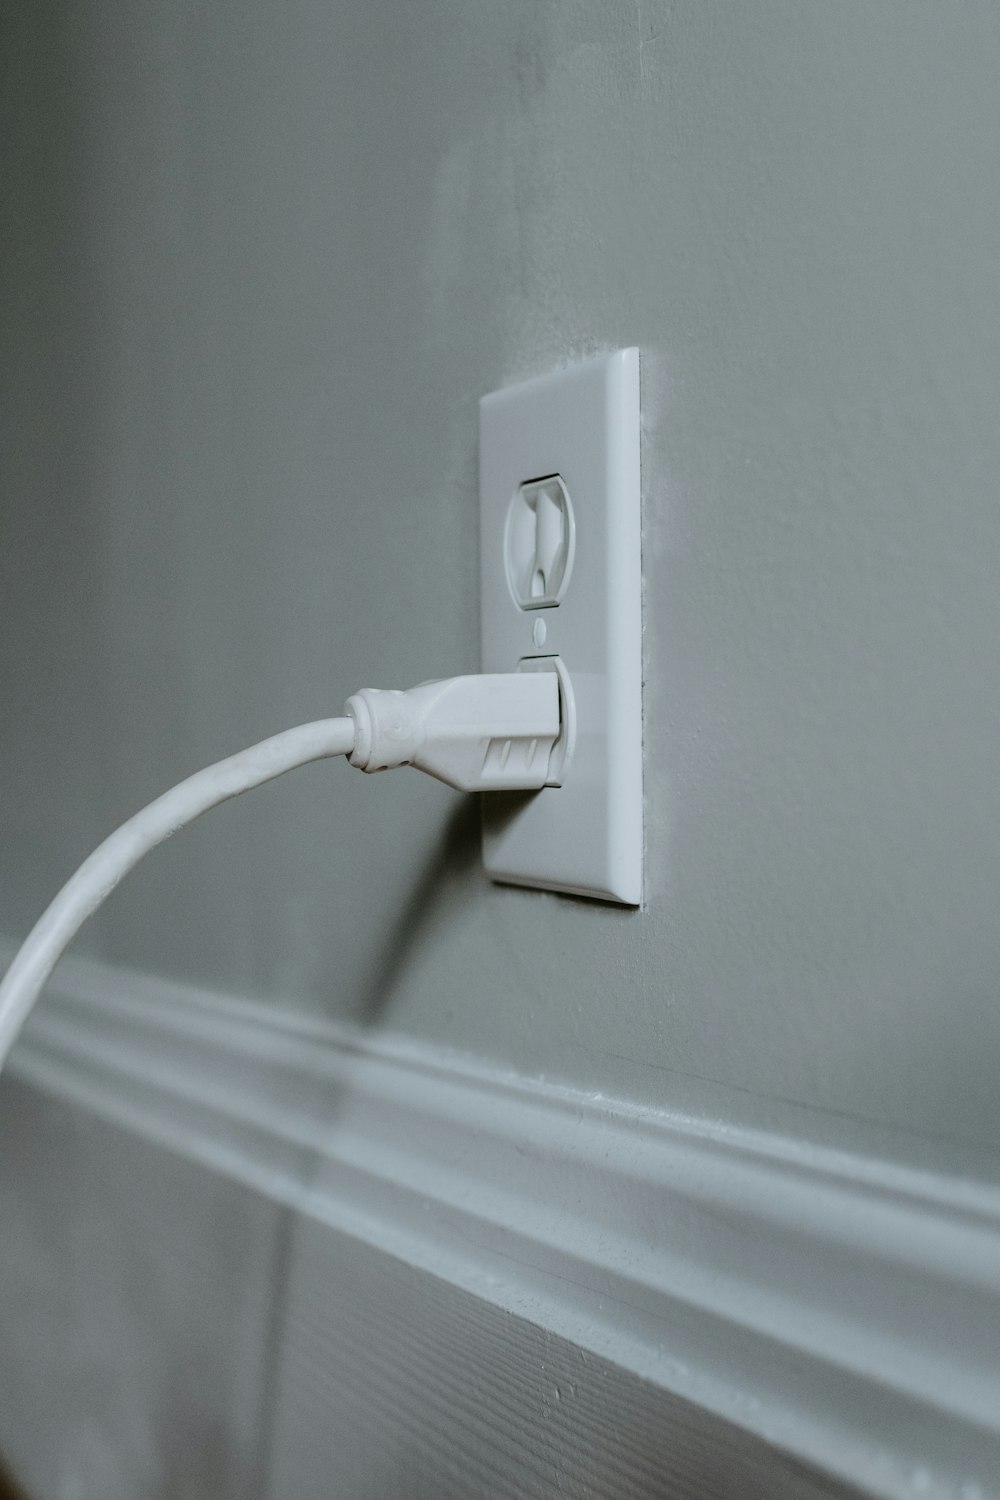 cabo usb branco conectado na tomada elétrica branca